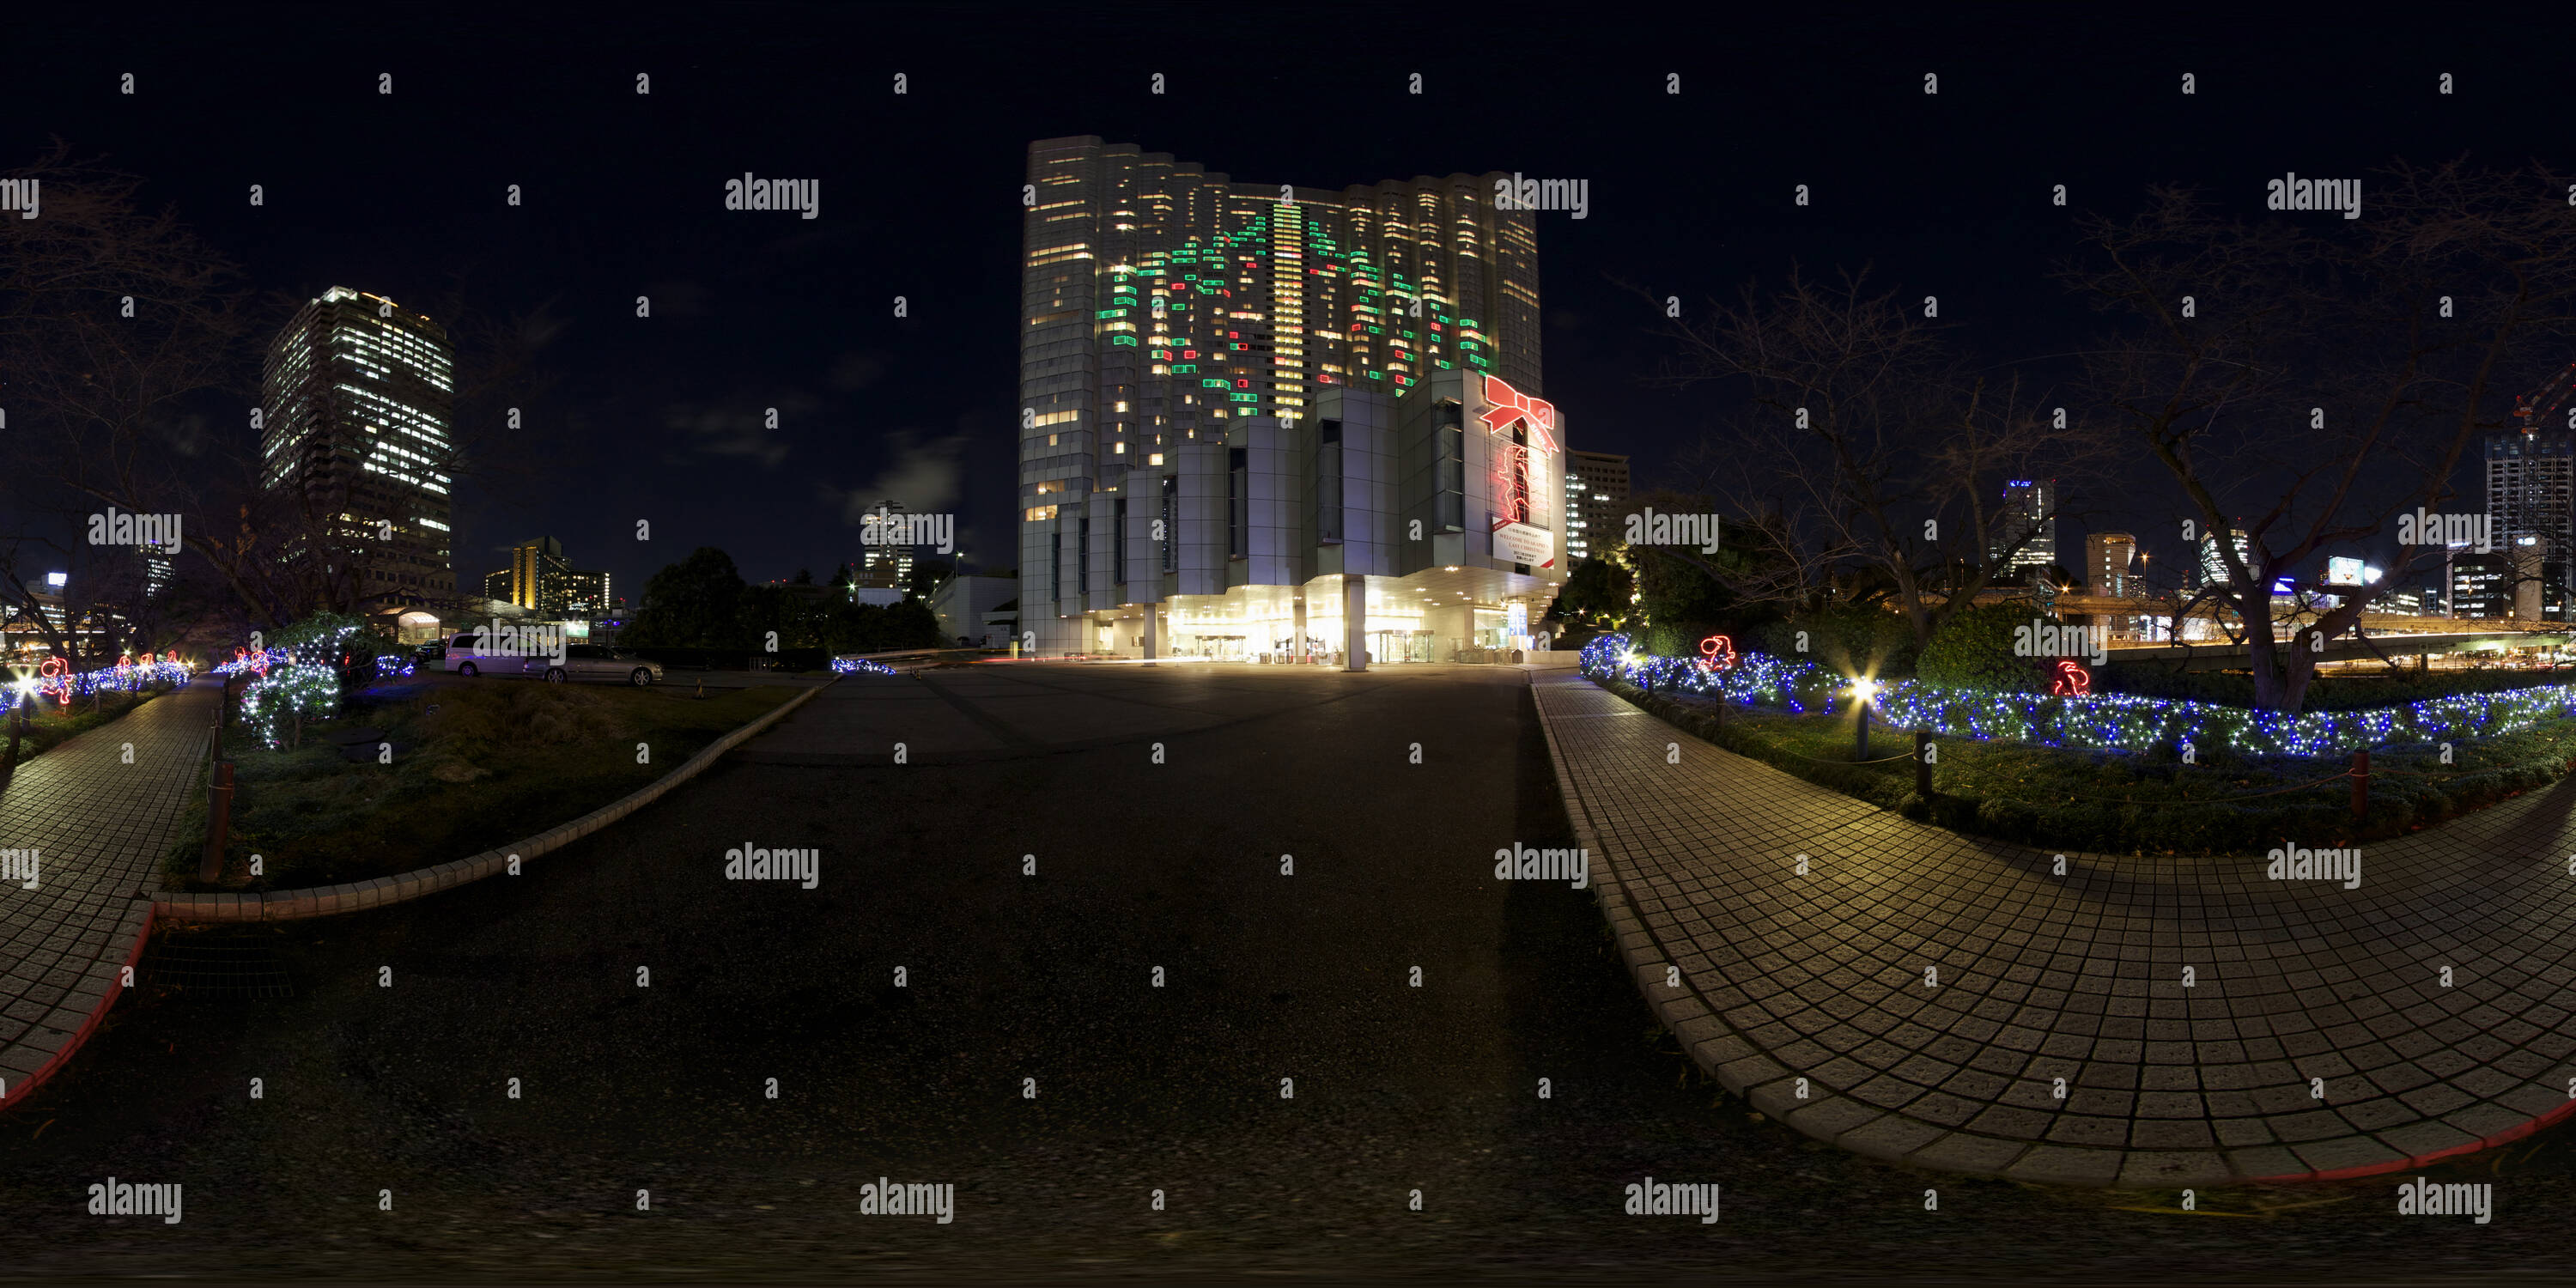 360 degree panoramic view of The Grand Prince Hotel Akasaka last Christmas Illumination